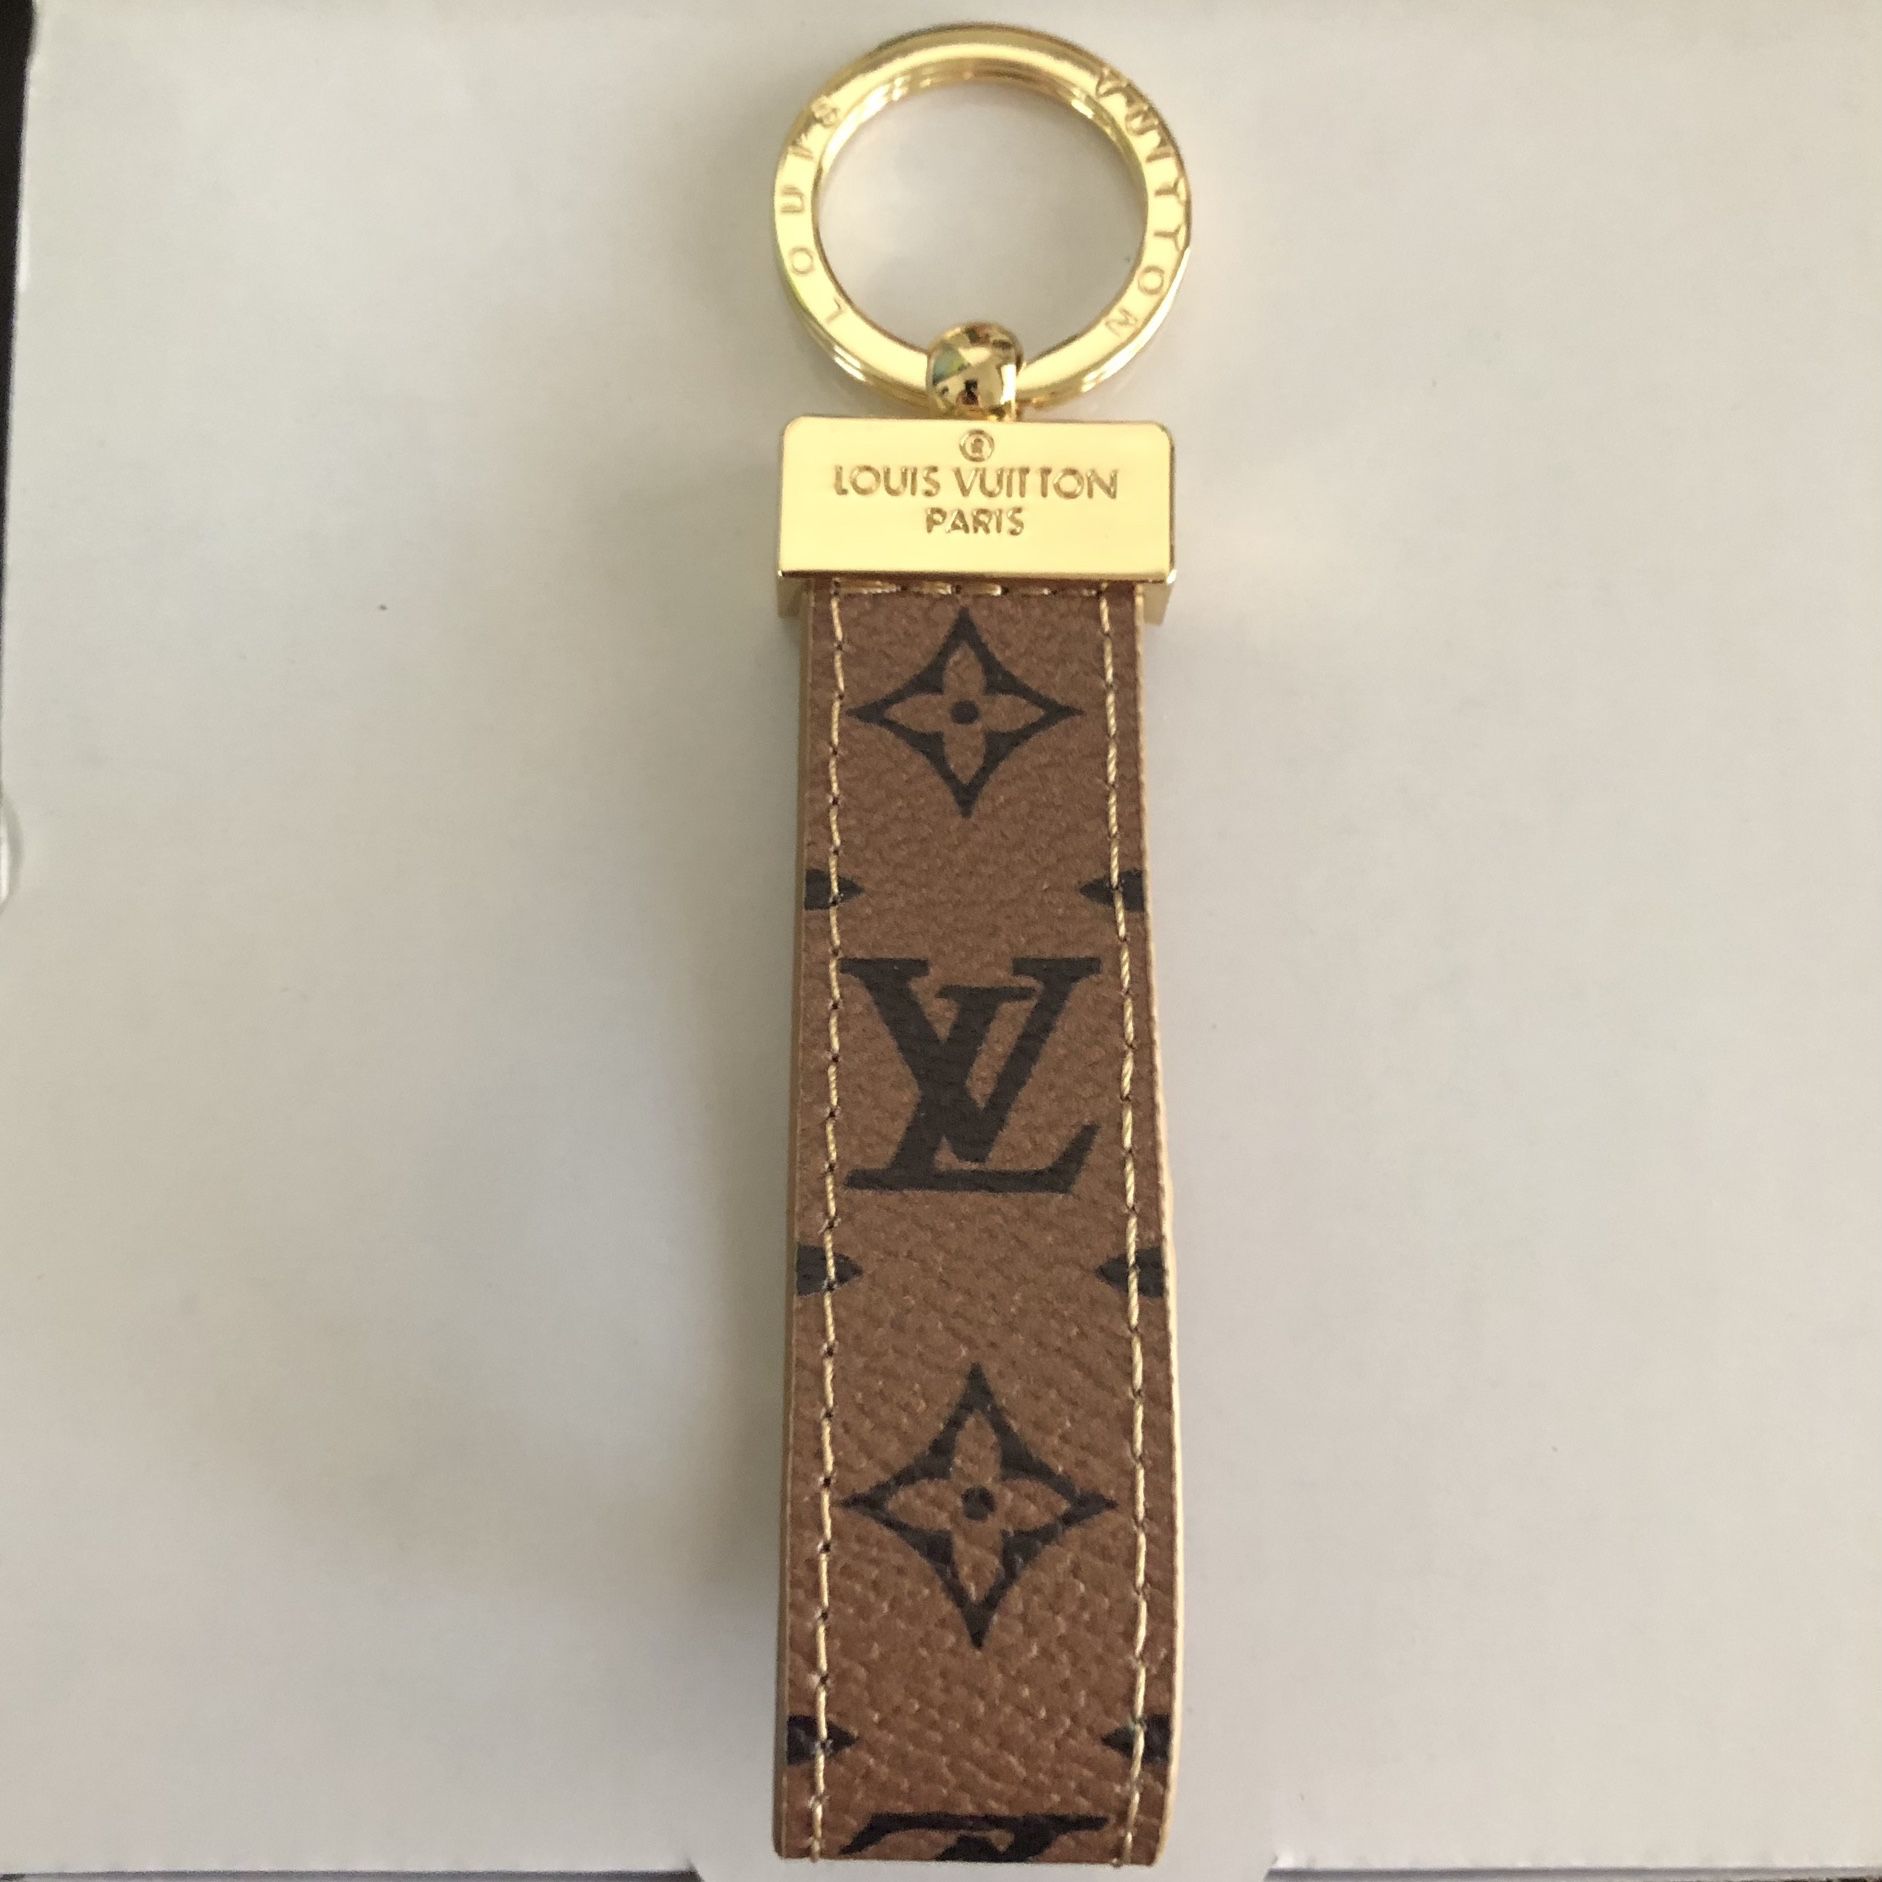 dragonne key holder with keys